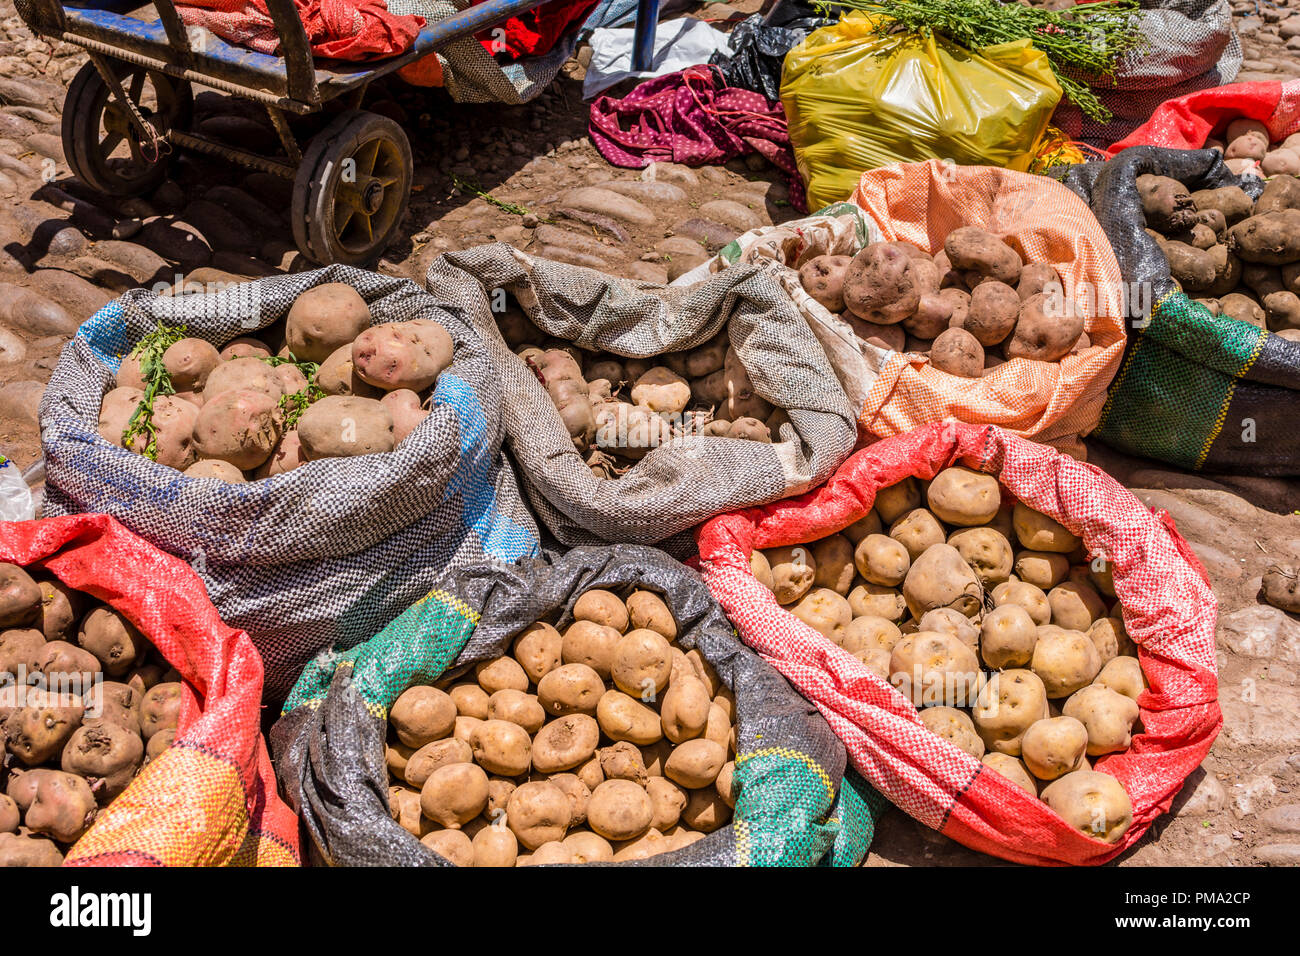 Peruvian potatoes for sale in colorful bags at Pisac Peru market. Stock Photo